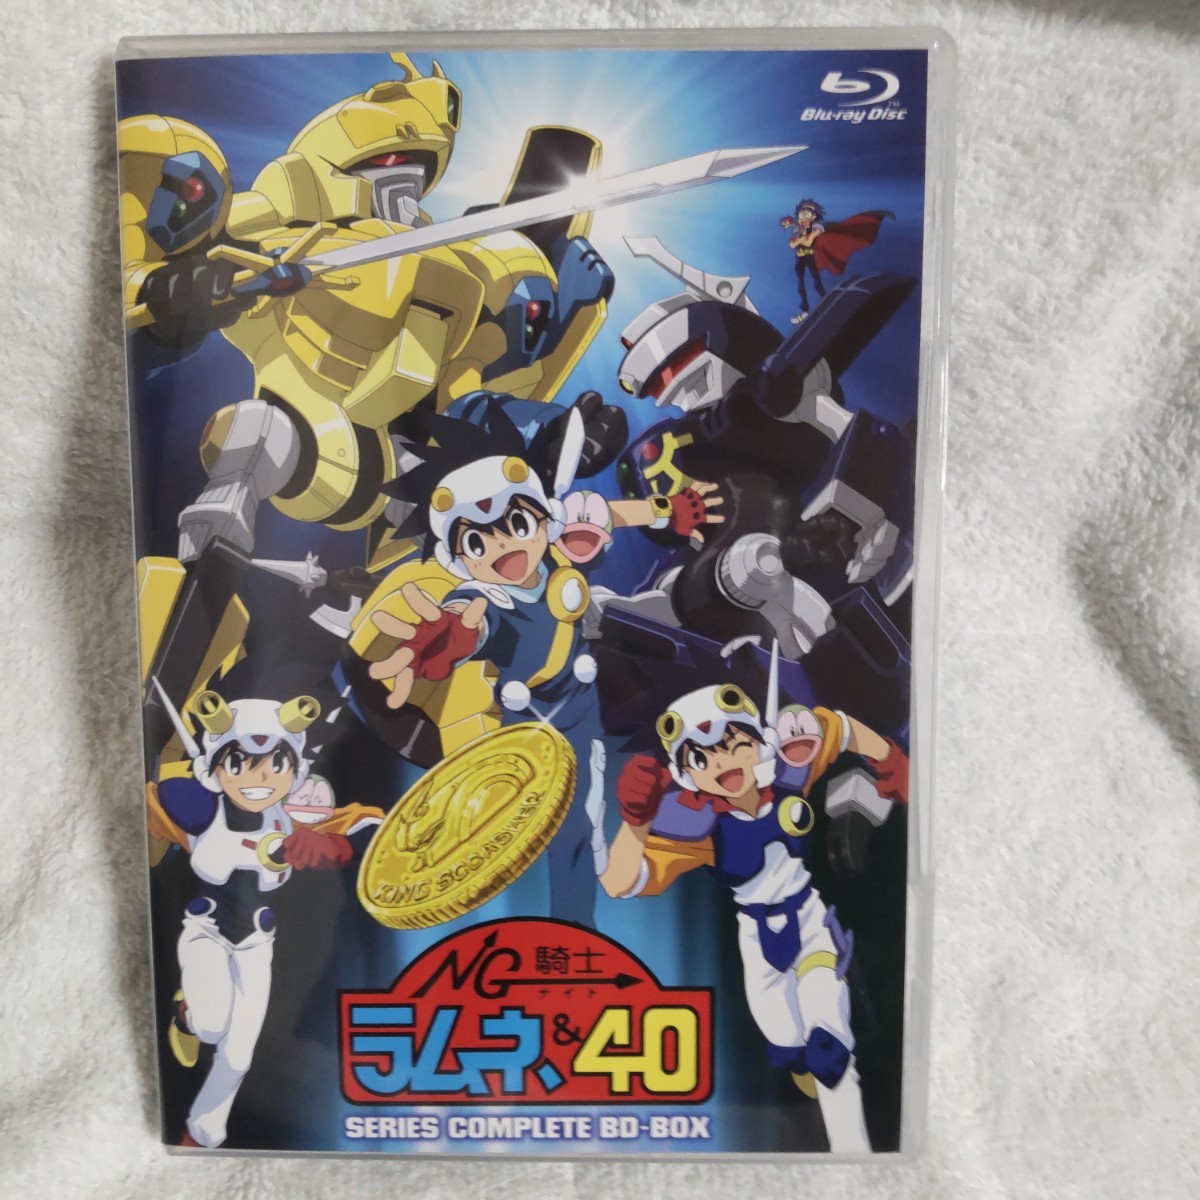 NG騎士ラムネ&40 シリーズ・コンプリートBD-BOX〈2枚組〉 Blu-ray_画像3